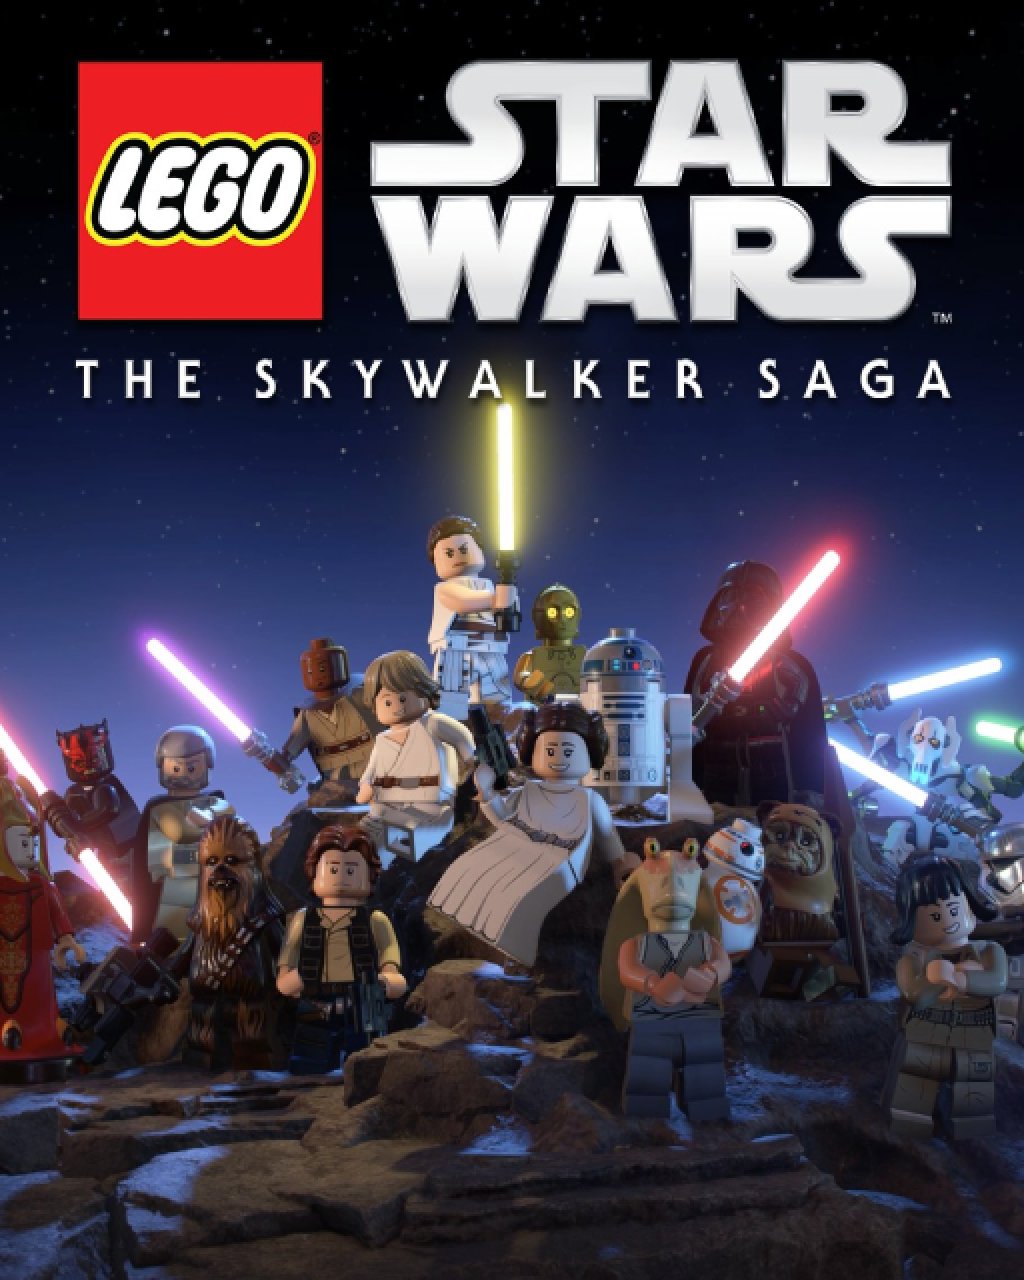 ESD LEGO Star Wars The Skywalker Saga